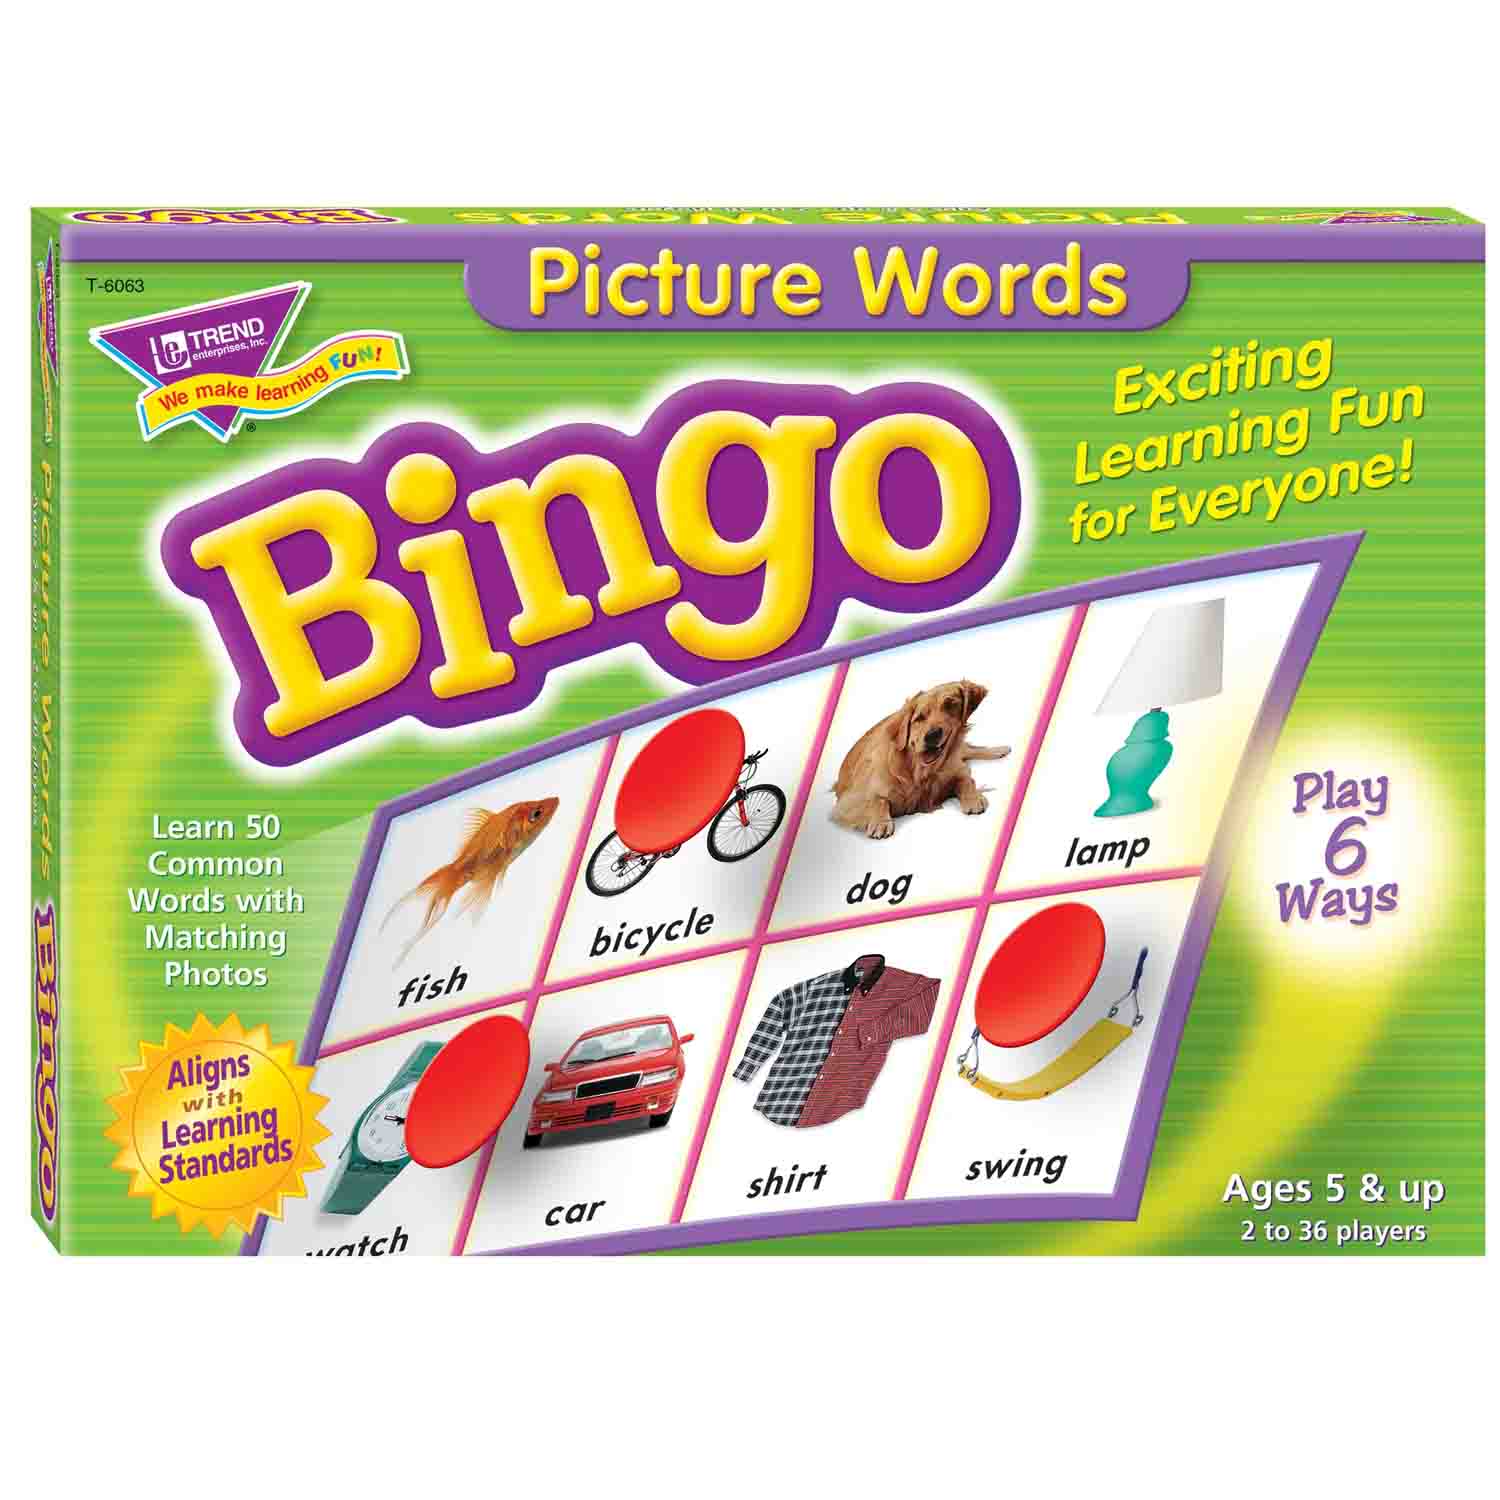 Picture Words Bingo Game